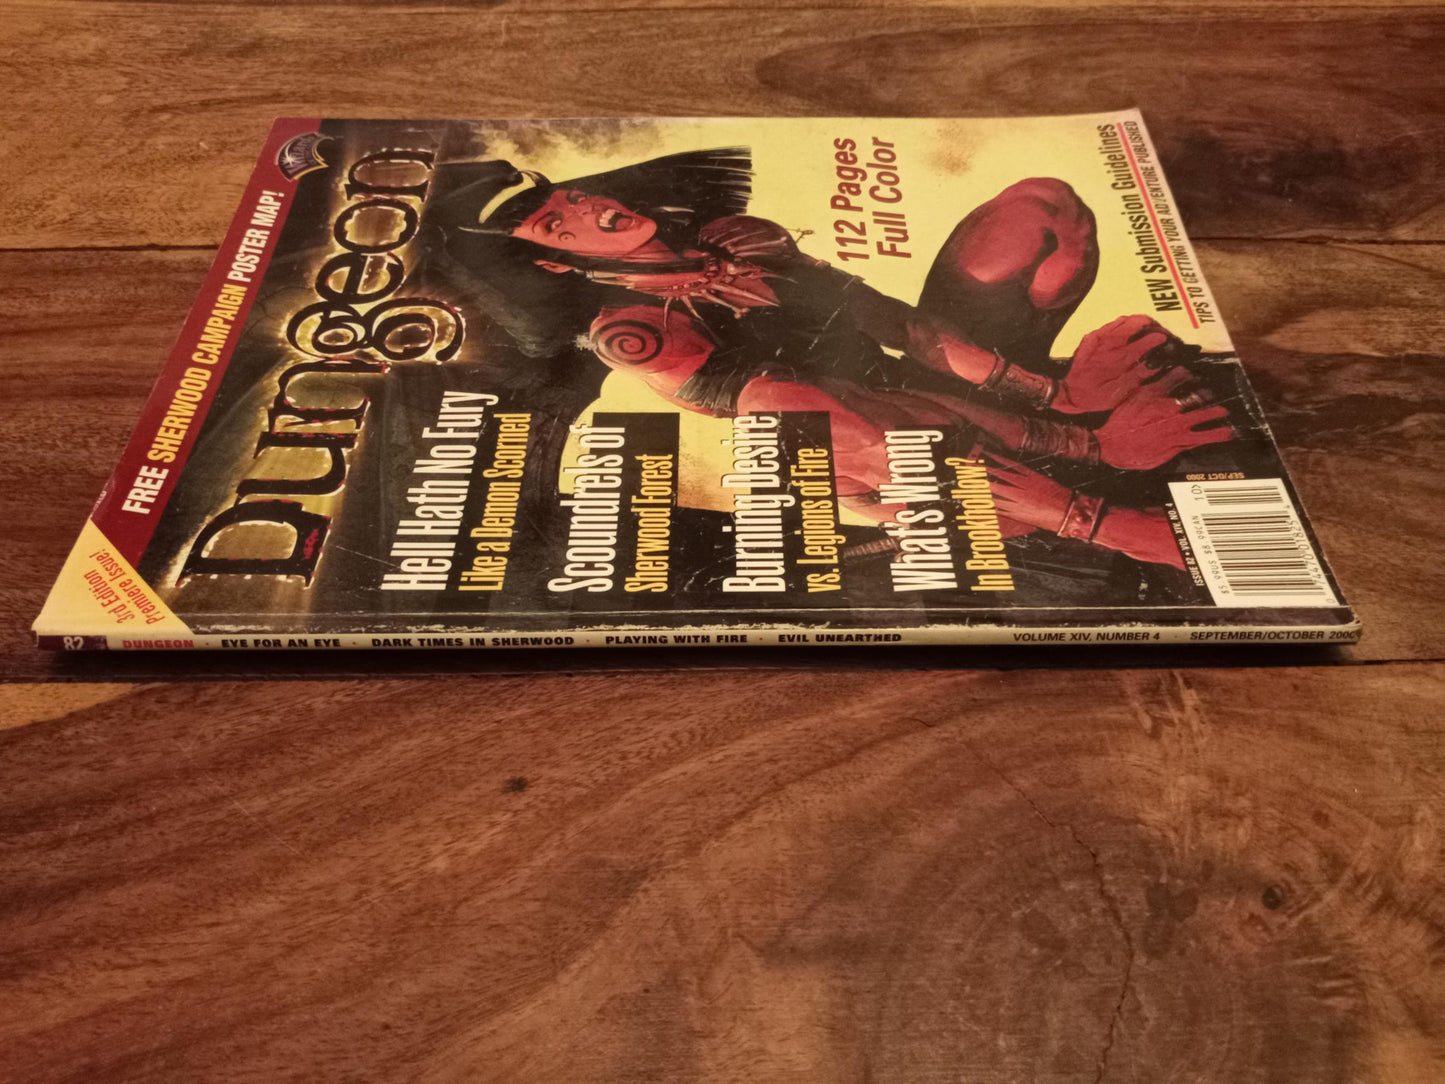 Dungeon Magazine Vol XIV No. 4 #82 September/October 2000 TSR D&D